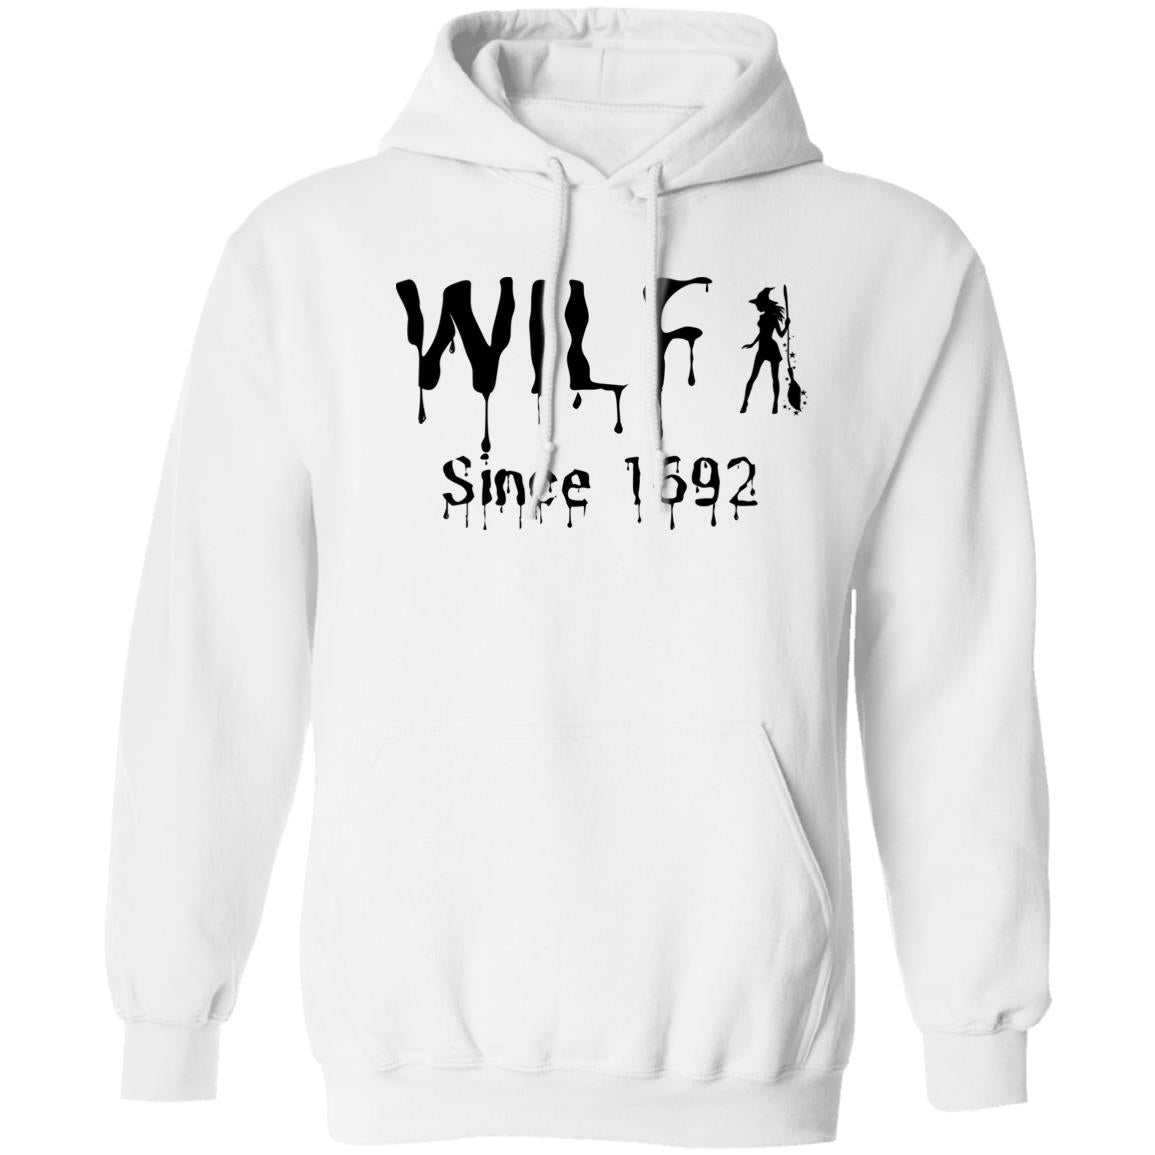 _WILF Since 1692 WILF Since 1692 Hoodie Sweatshirt